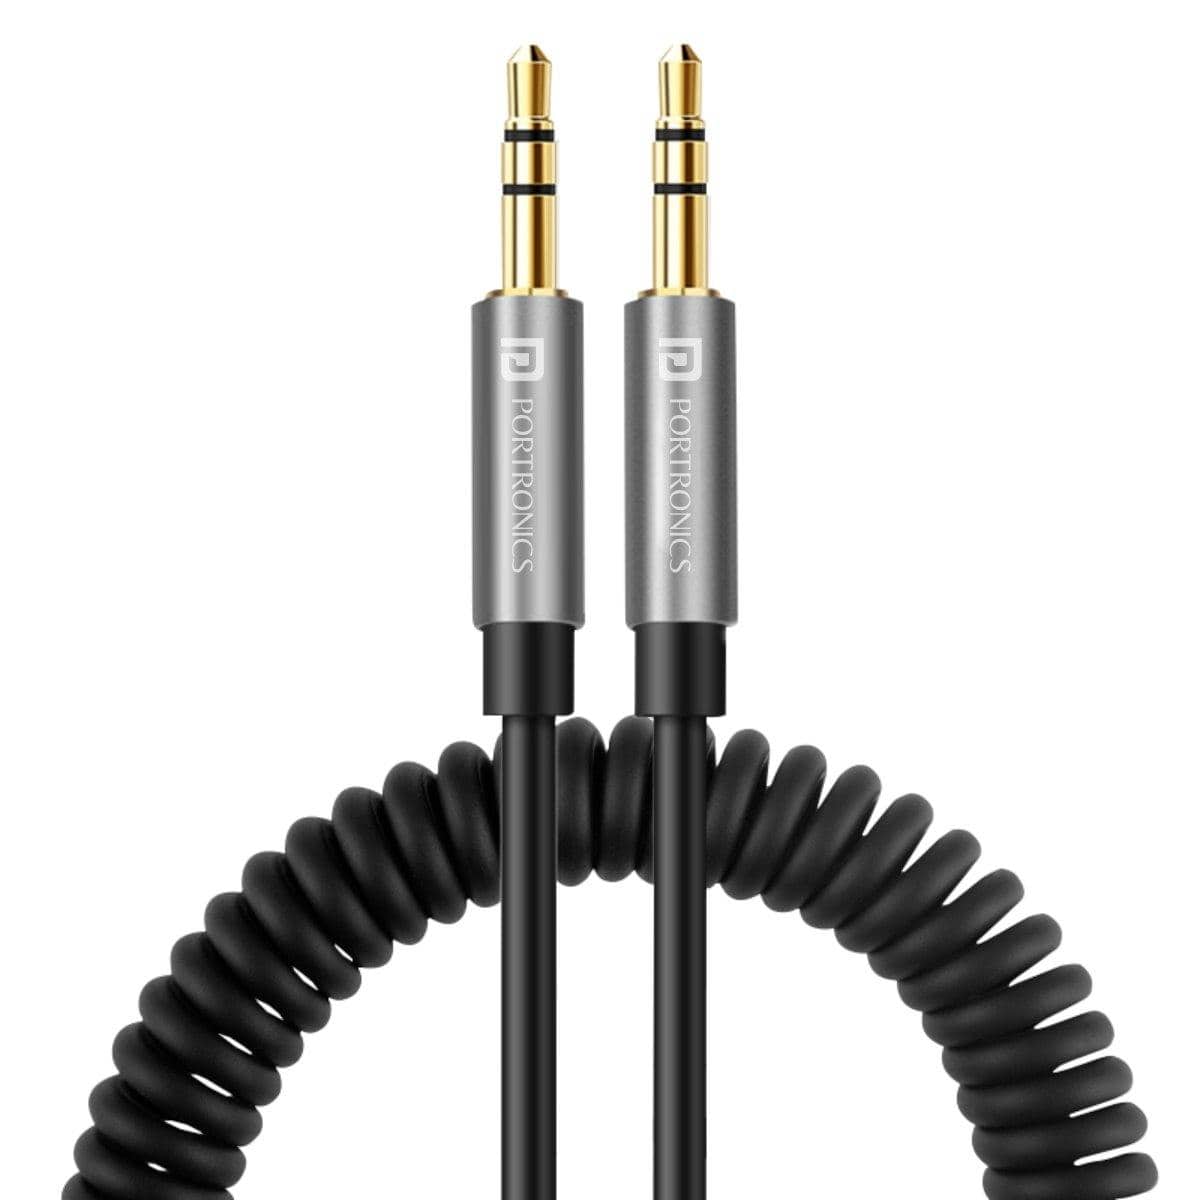 PORTRONICS-Konnect AUX 6 1.5 Meter Long 3.5 mm Spiral Cable